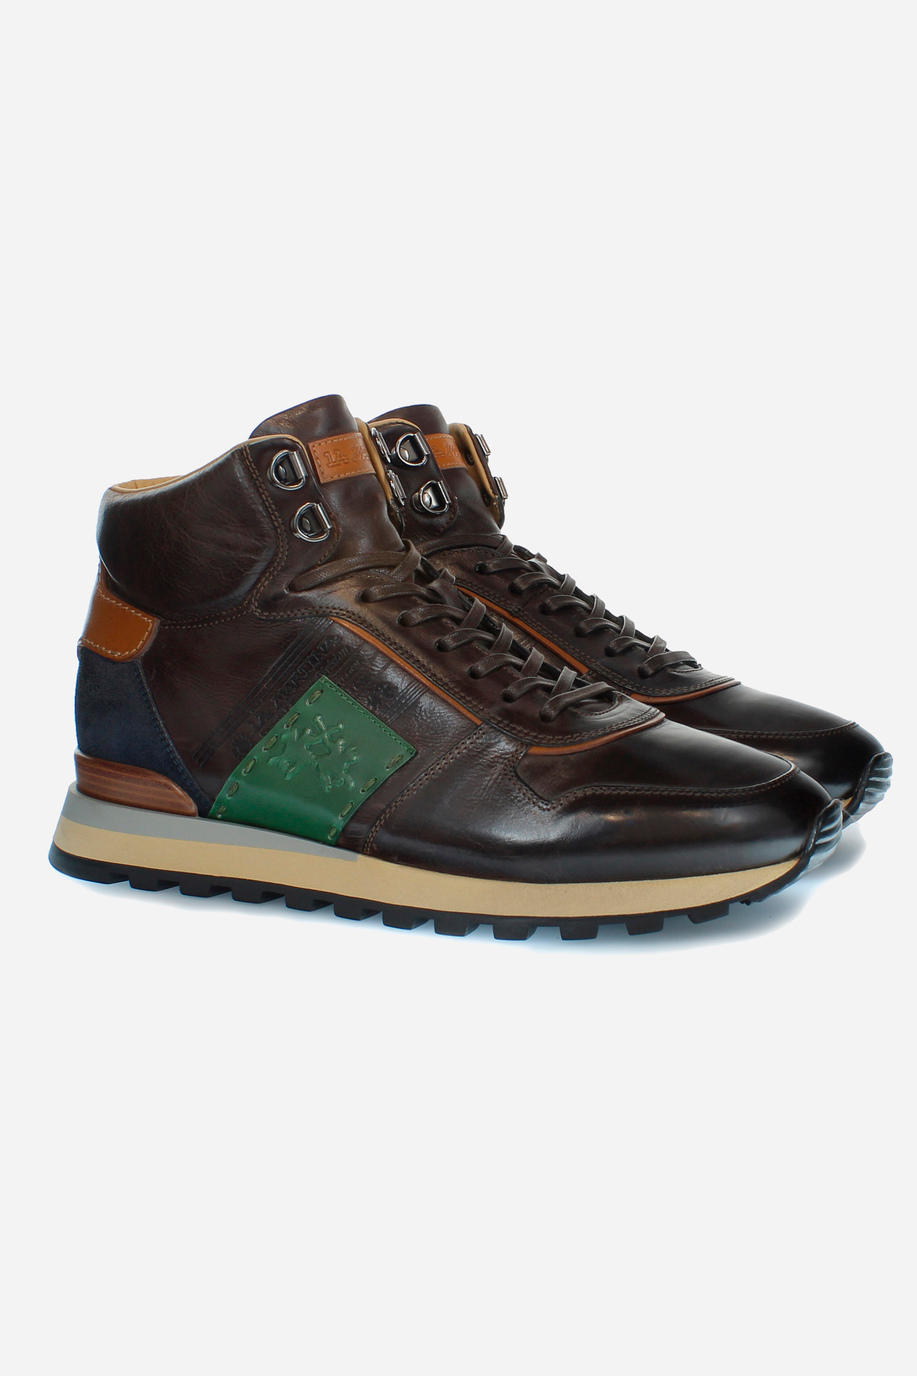 Sneaker high top uomo in pelle con fodera montone - Accessori | La Martina - Official Online Shop